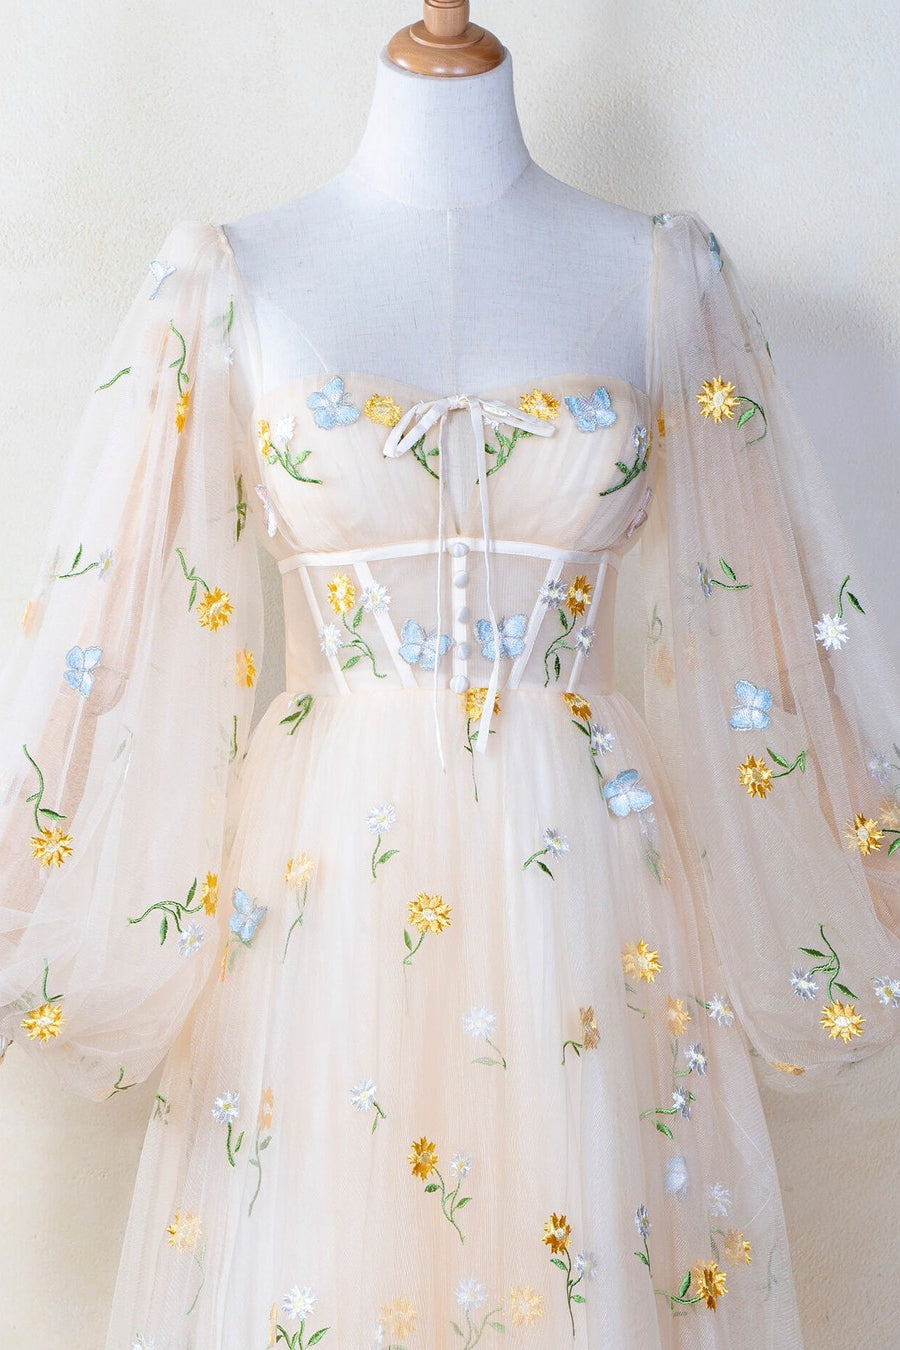 Floral Print Dress - Maxi Dress - Peach and Blue Dress - $106.00 - Lulus